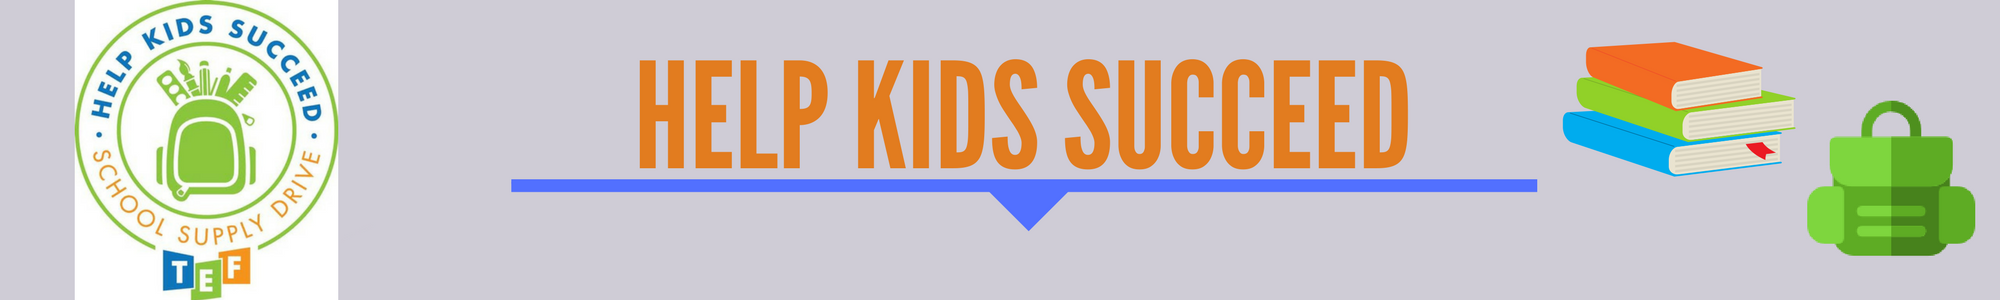 Help Kids Succeed - Banner Image